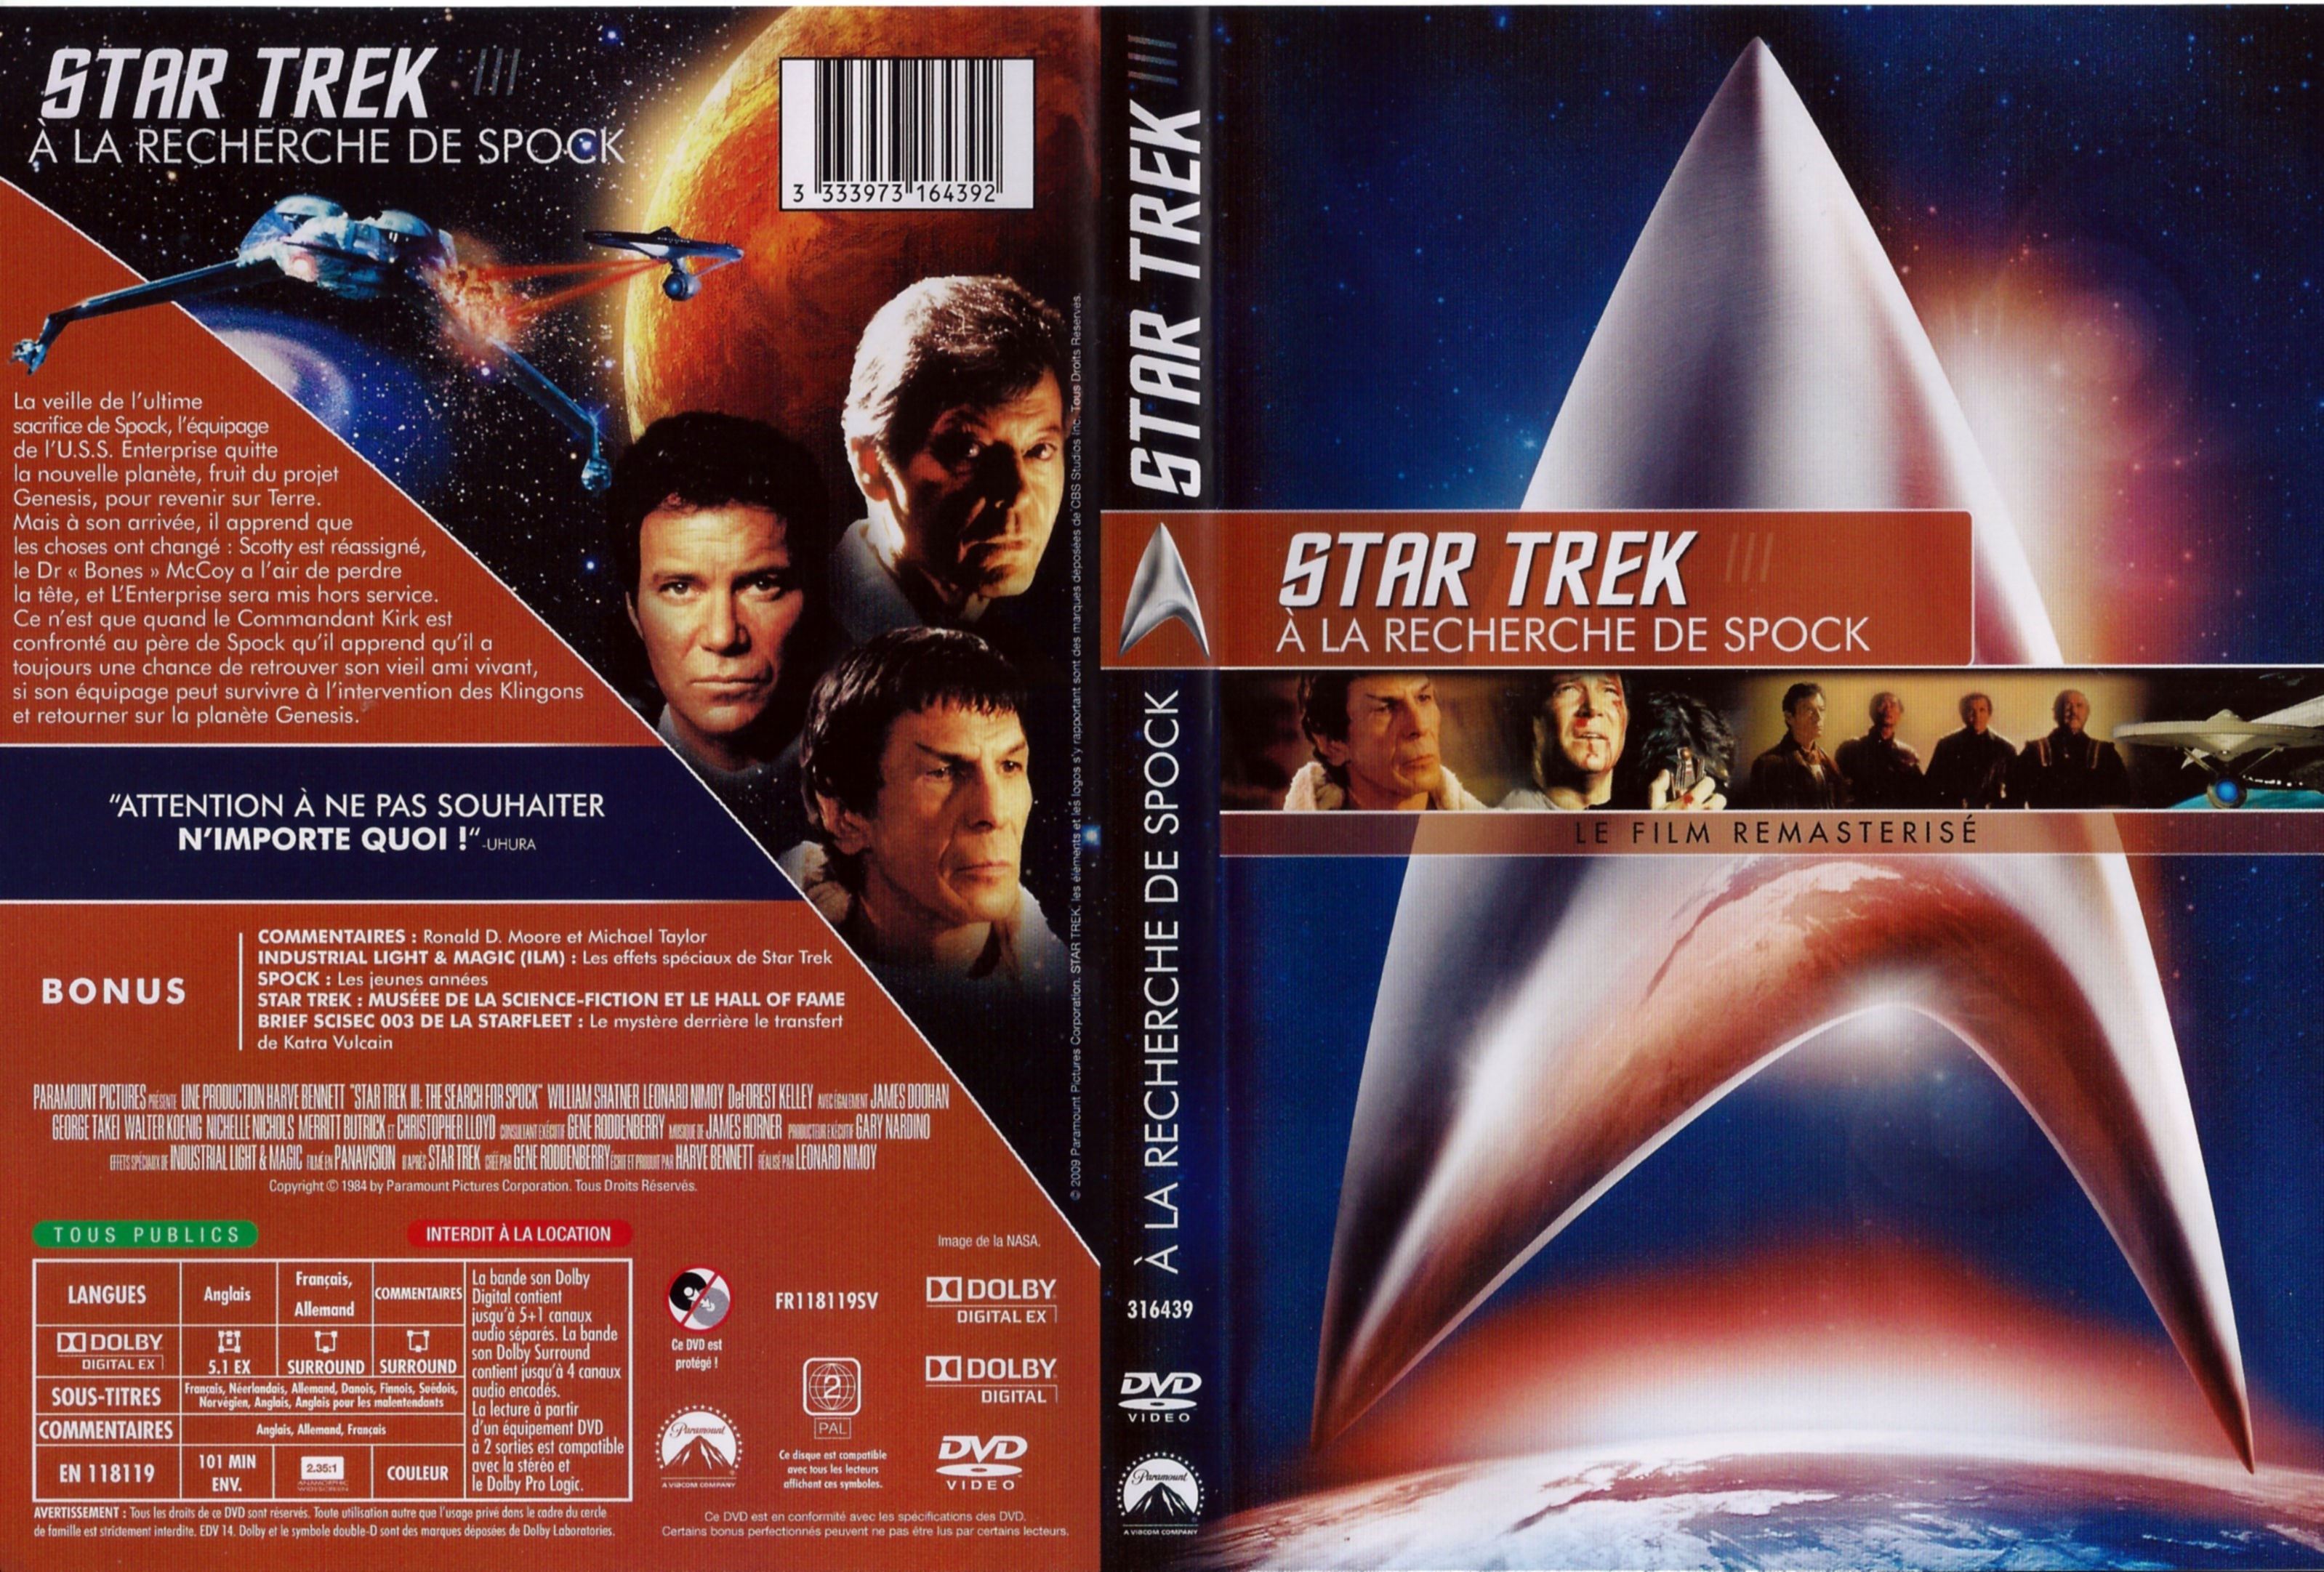 Jaquette DVD Star Trek 3  la recherche de Spock v2